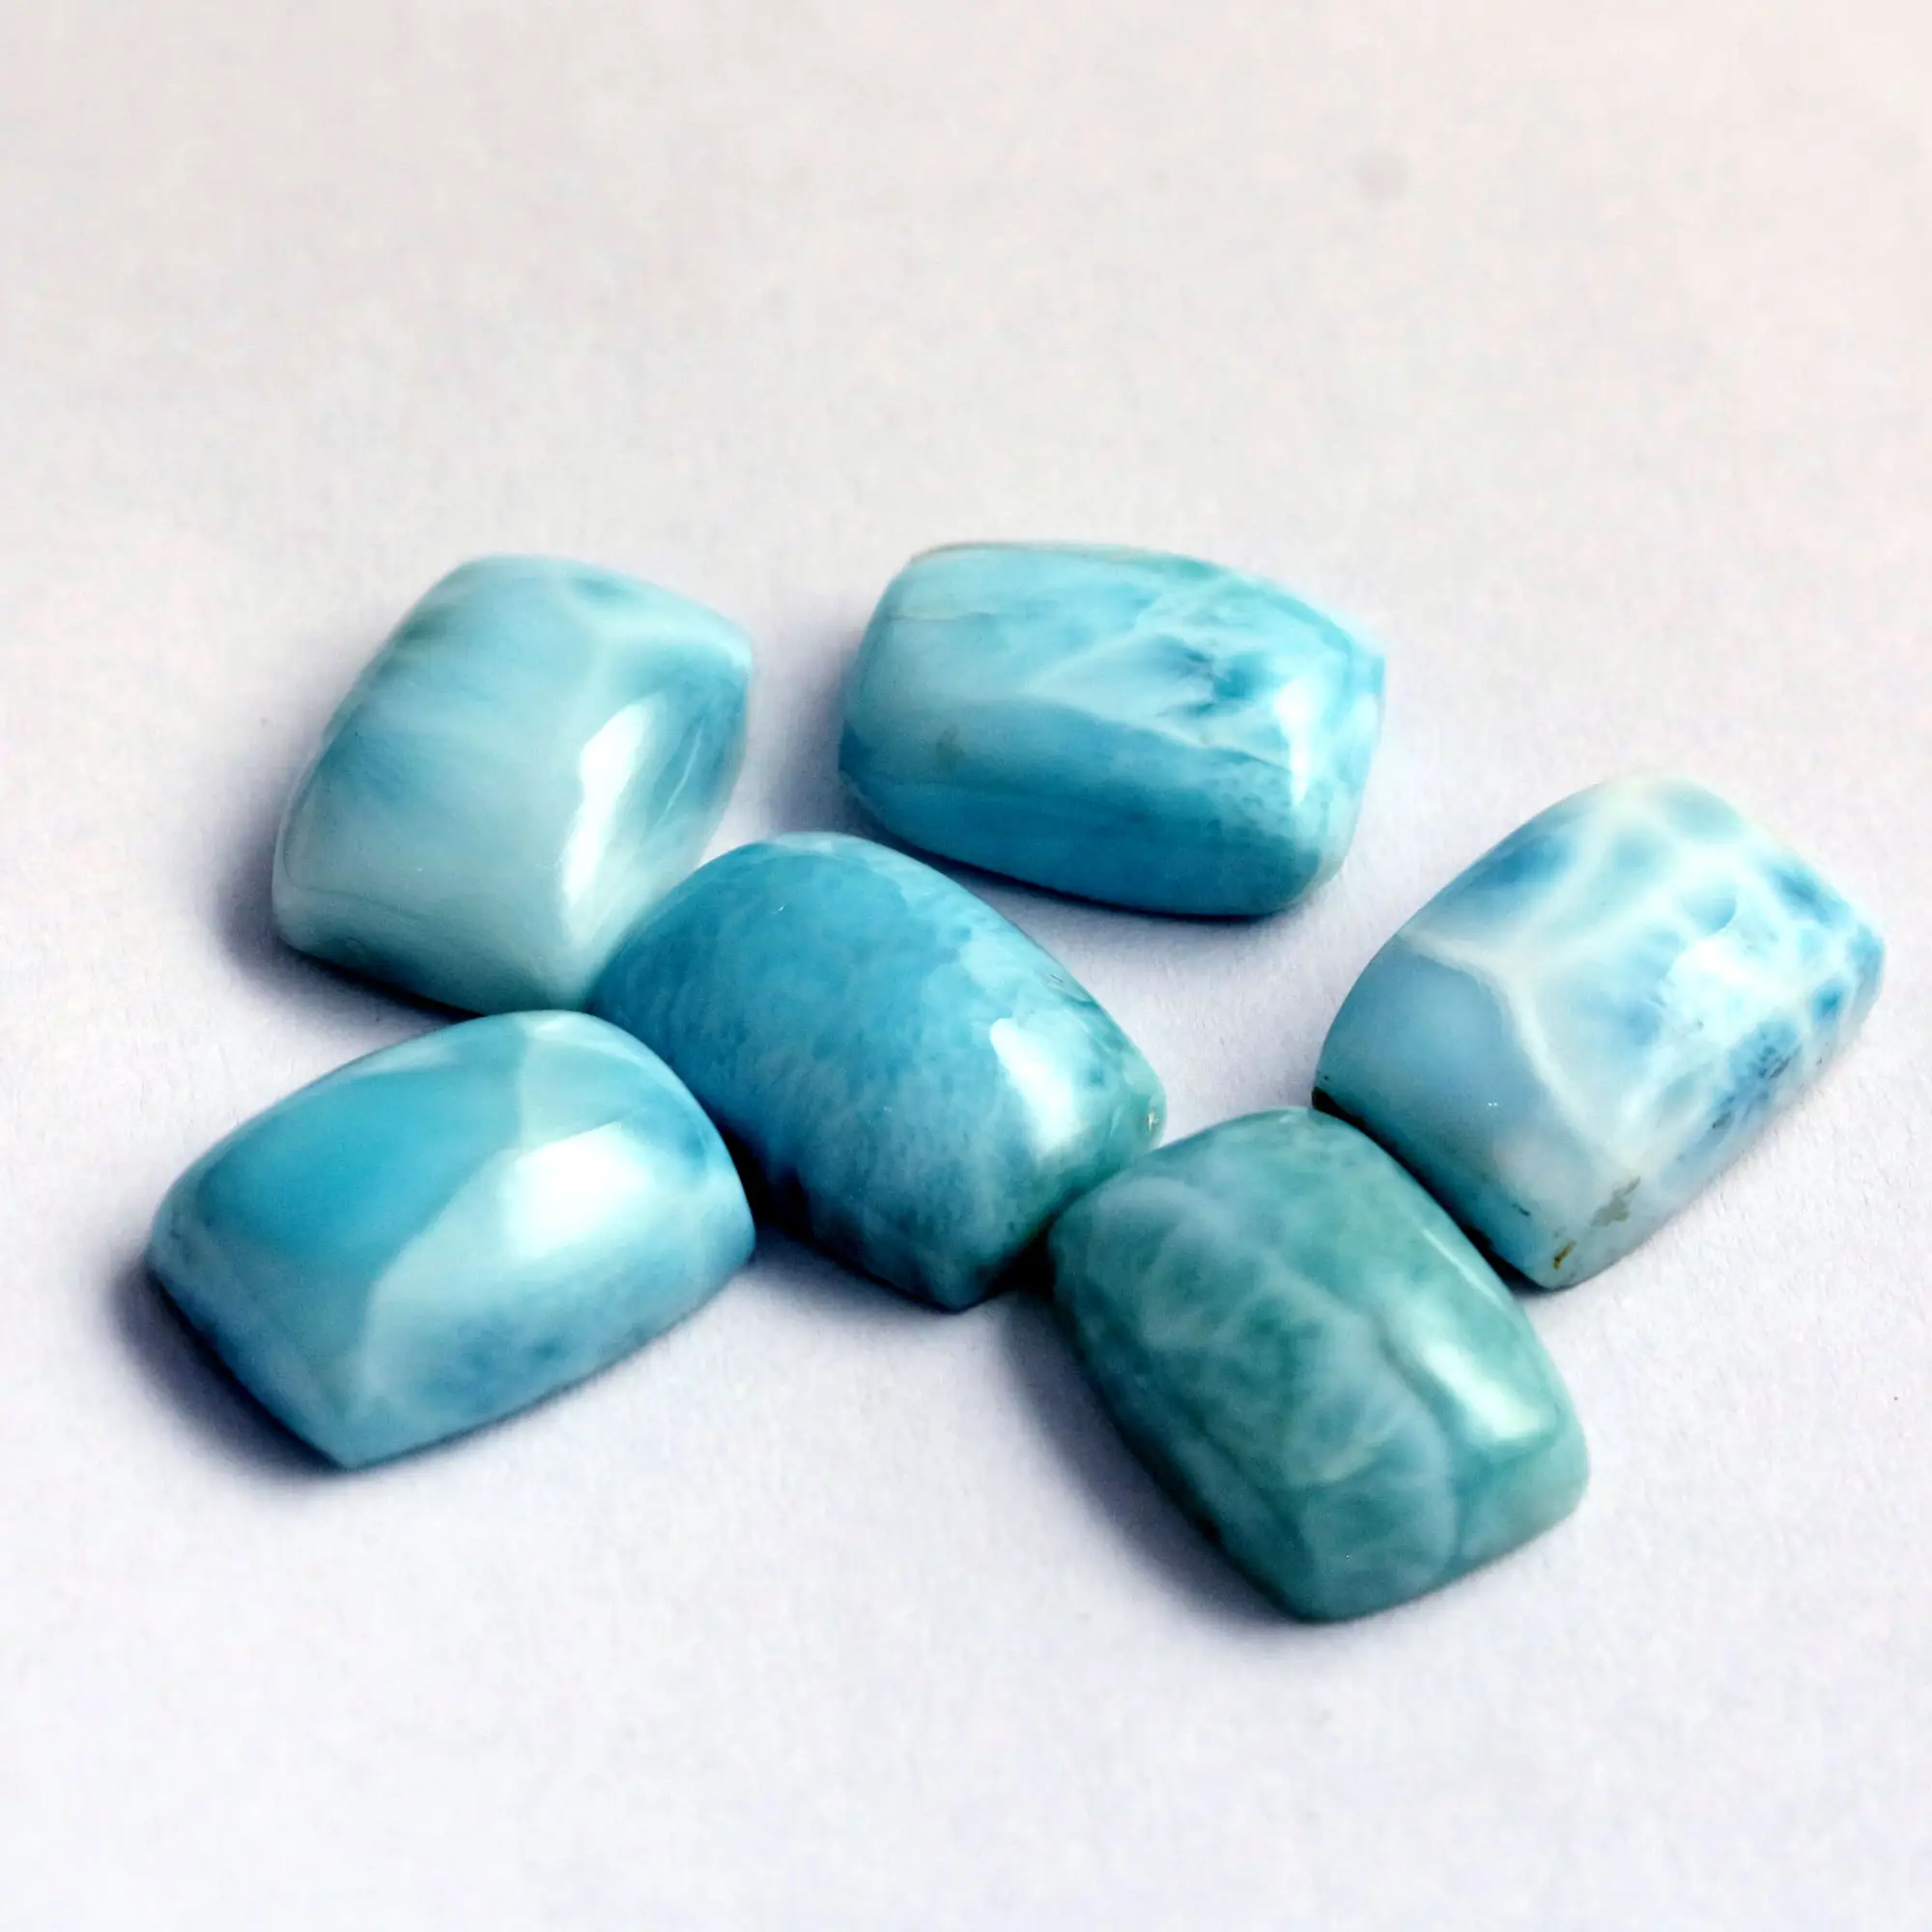 High Quality Natural Larimar Sky Blue Loose Calibrated Gemstone Wholesale Price Lot